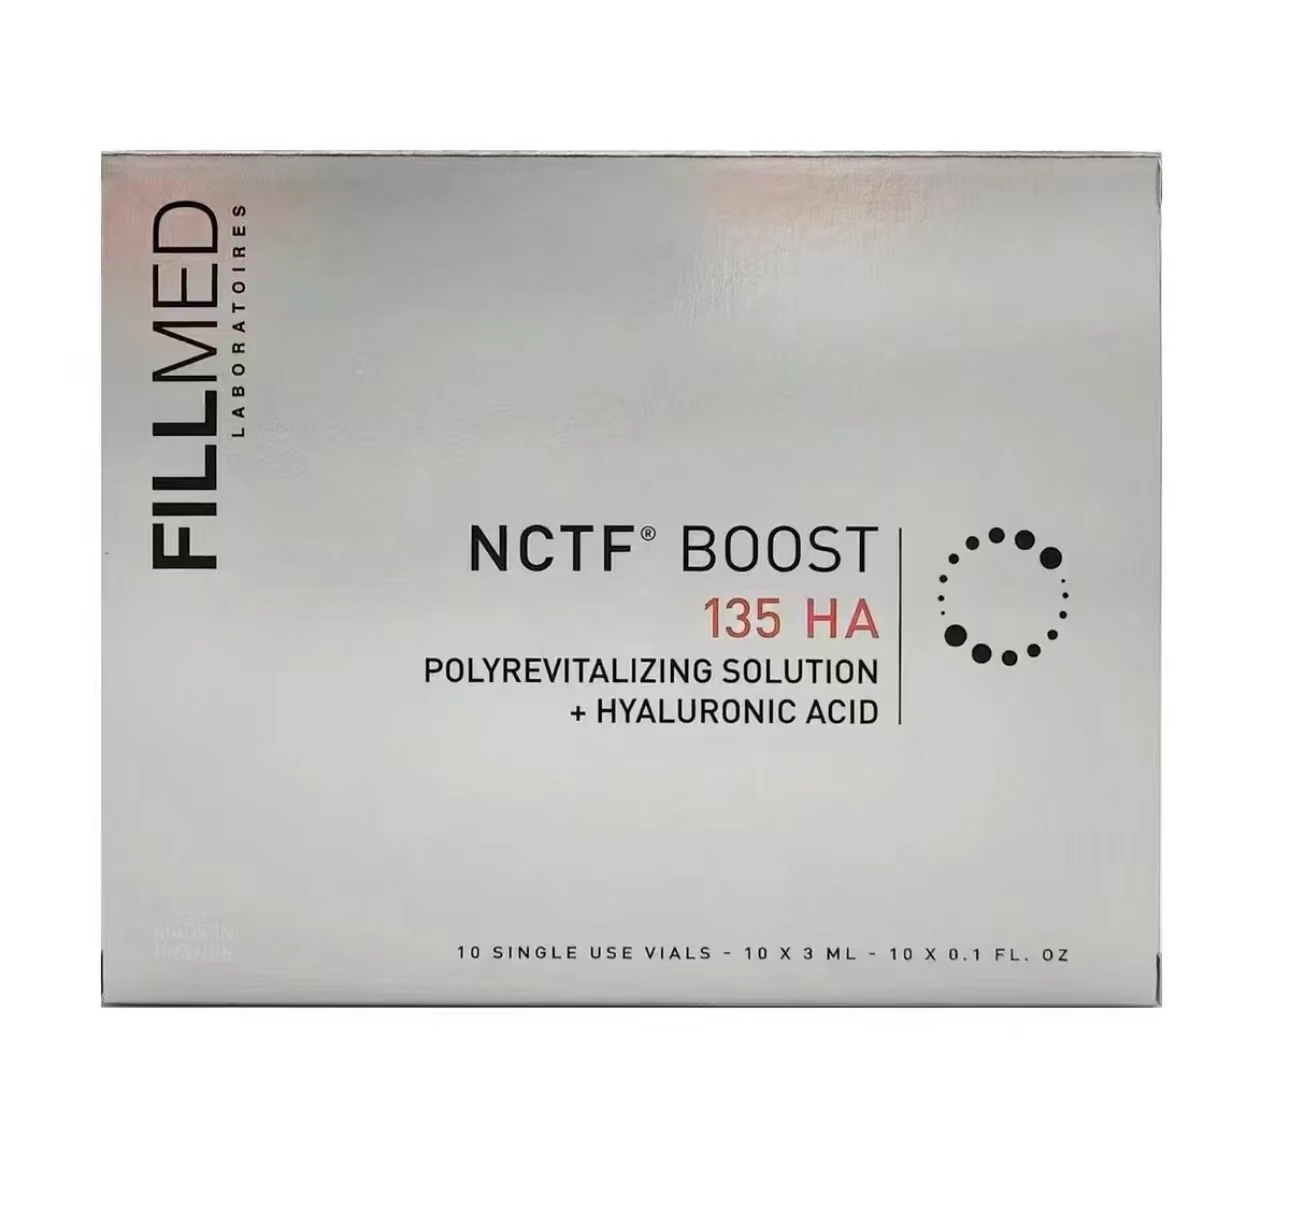 Fillmed菲欧曼银盒NCTF BOOST 135HA(3mlx10）